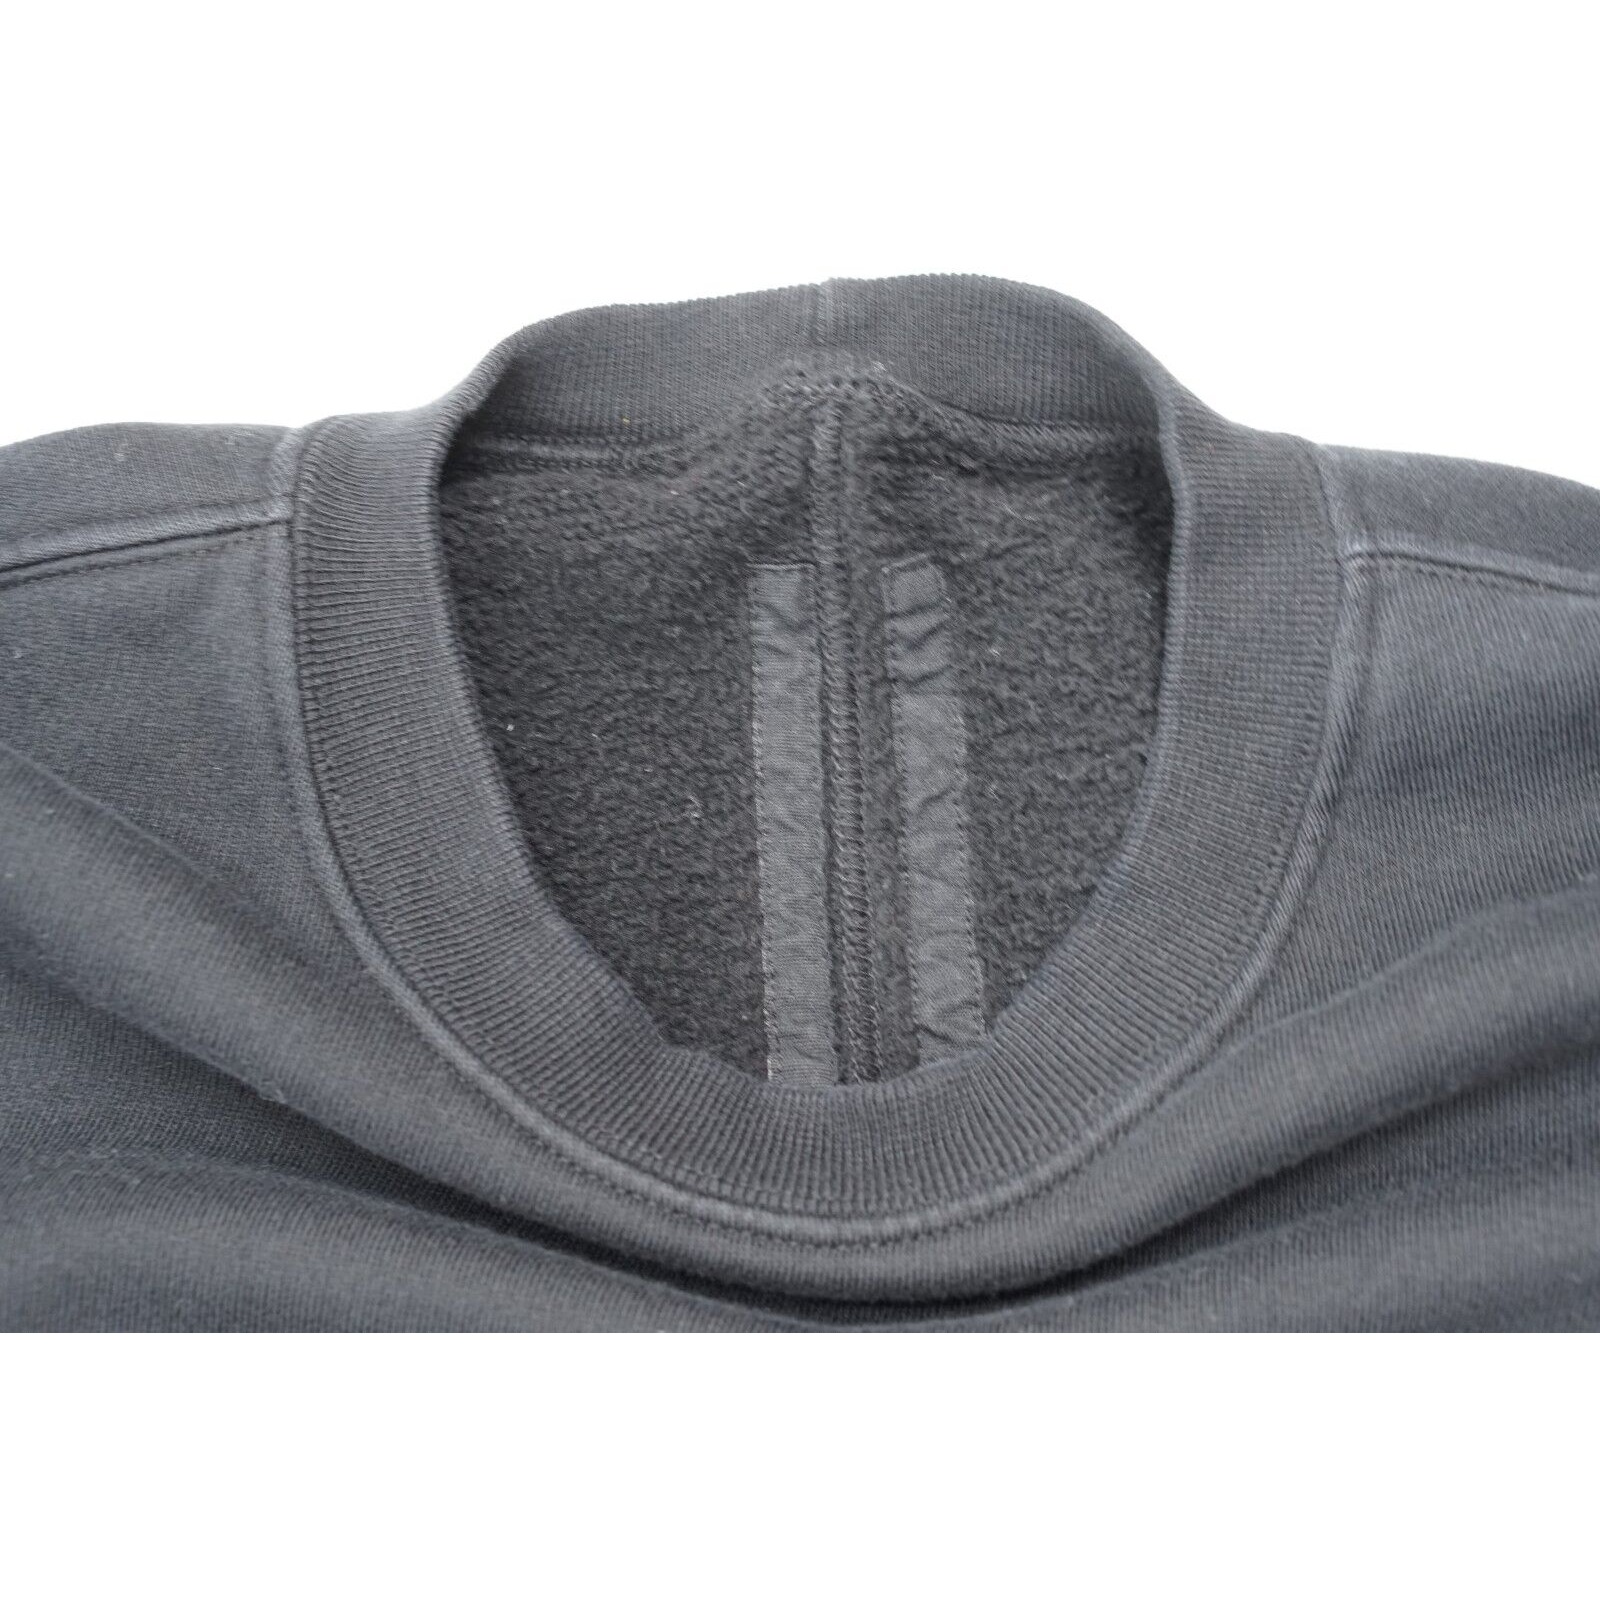 Black Crew Neck Long Sleeve Shirt Cotton - 2